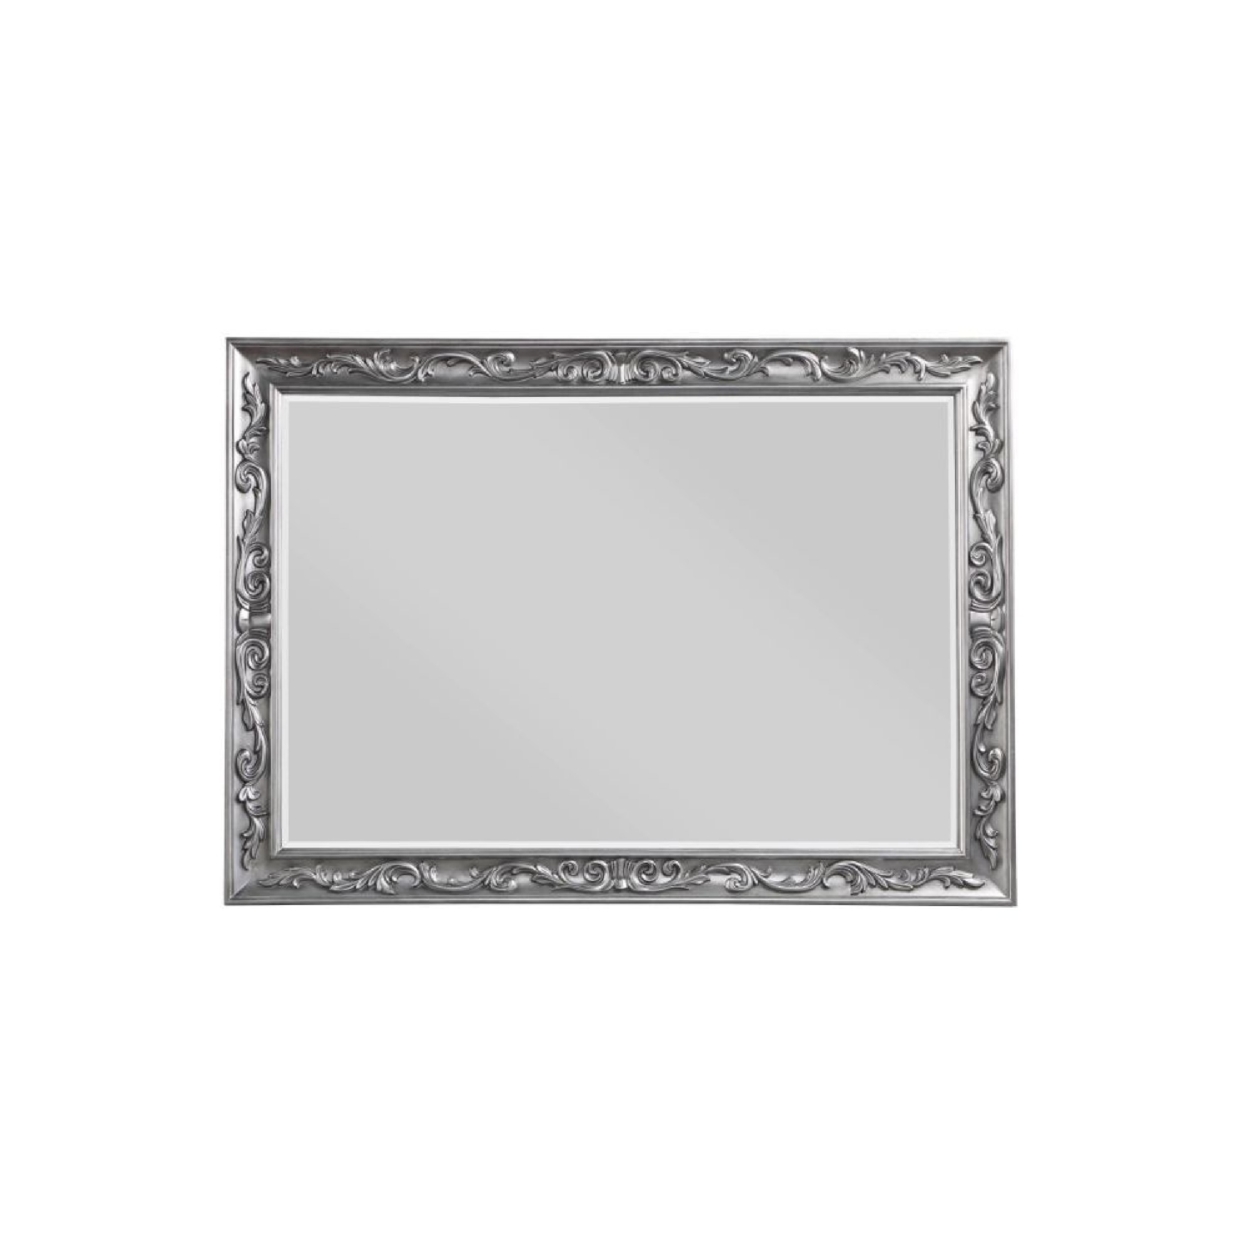 55 Inch Wood Mirror, Raised Scroll Floral Trim, Beveled, Silver- Saltoro Sherpi